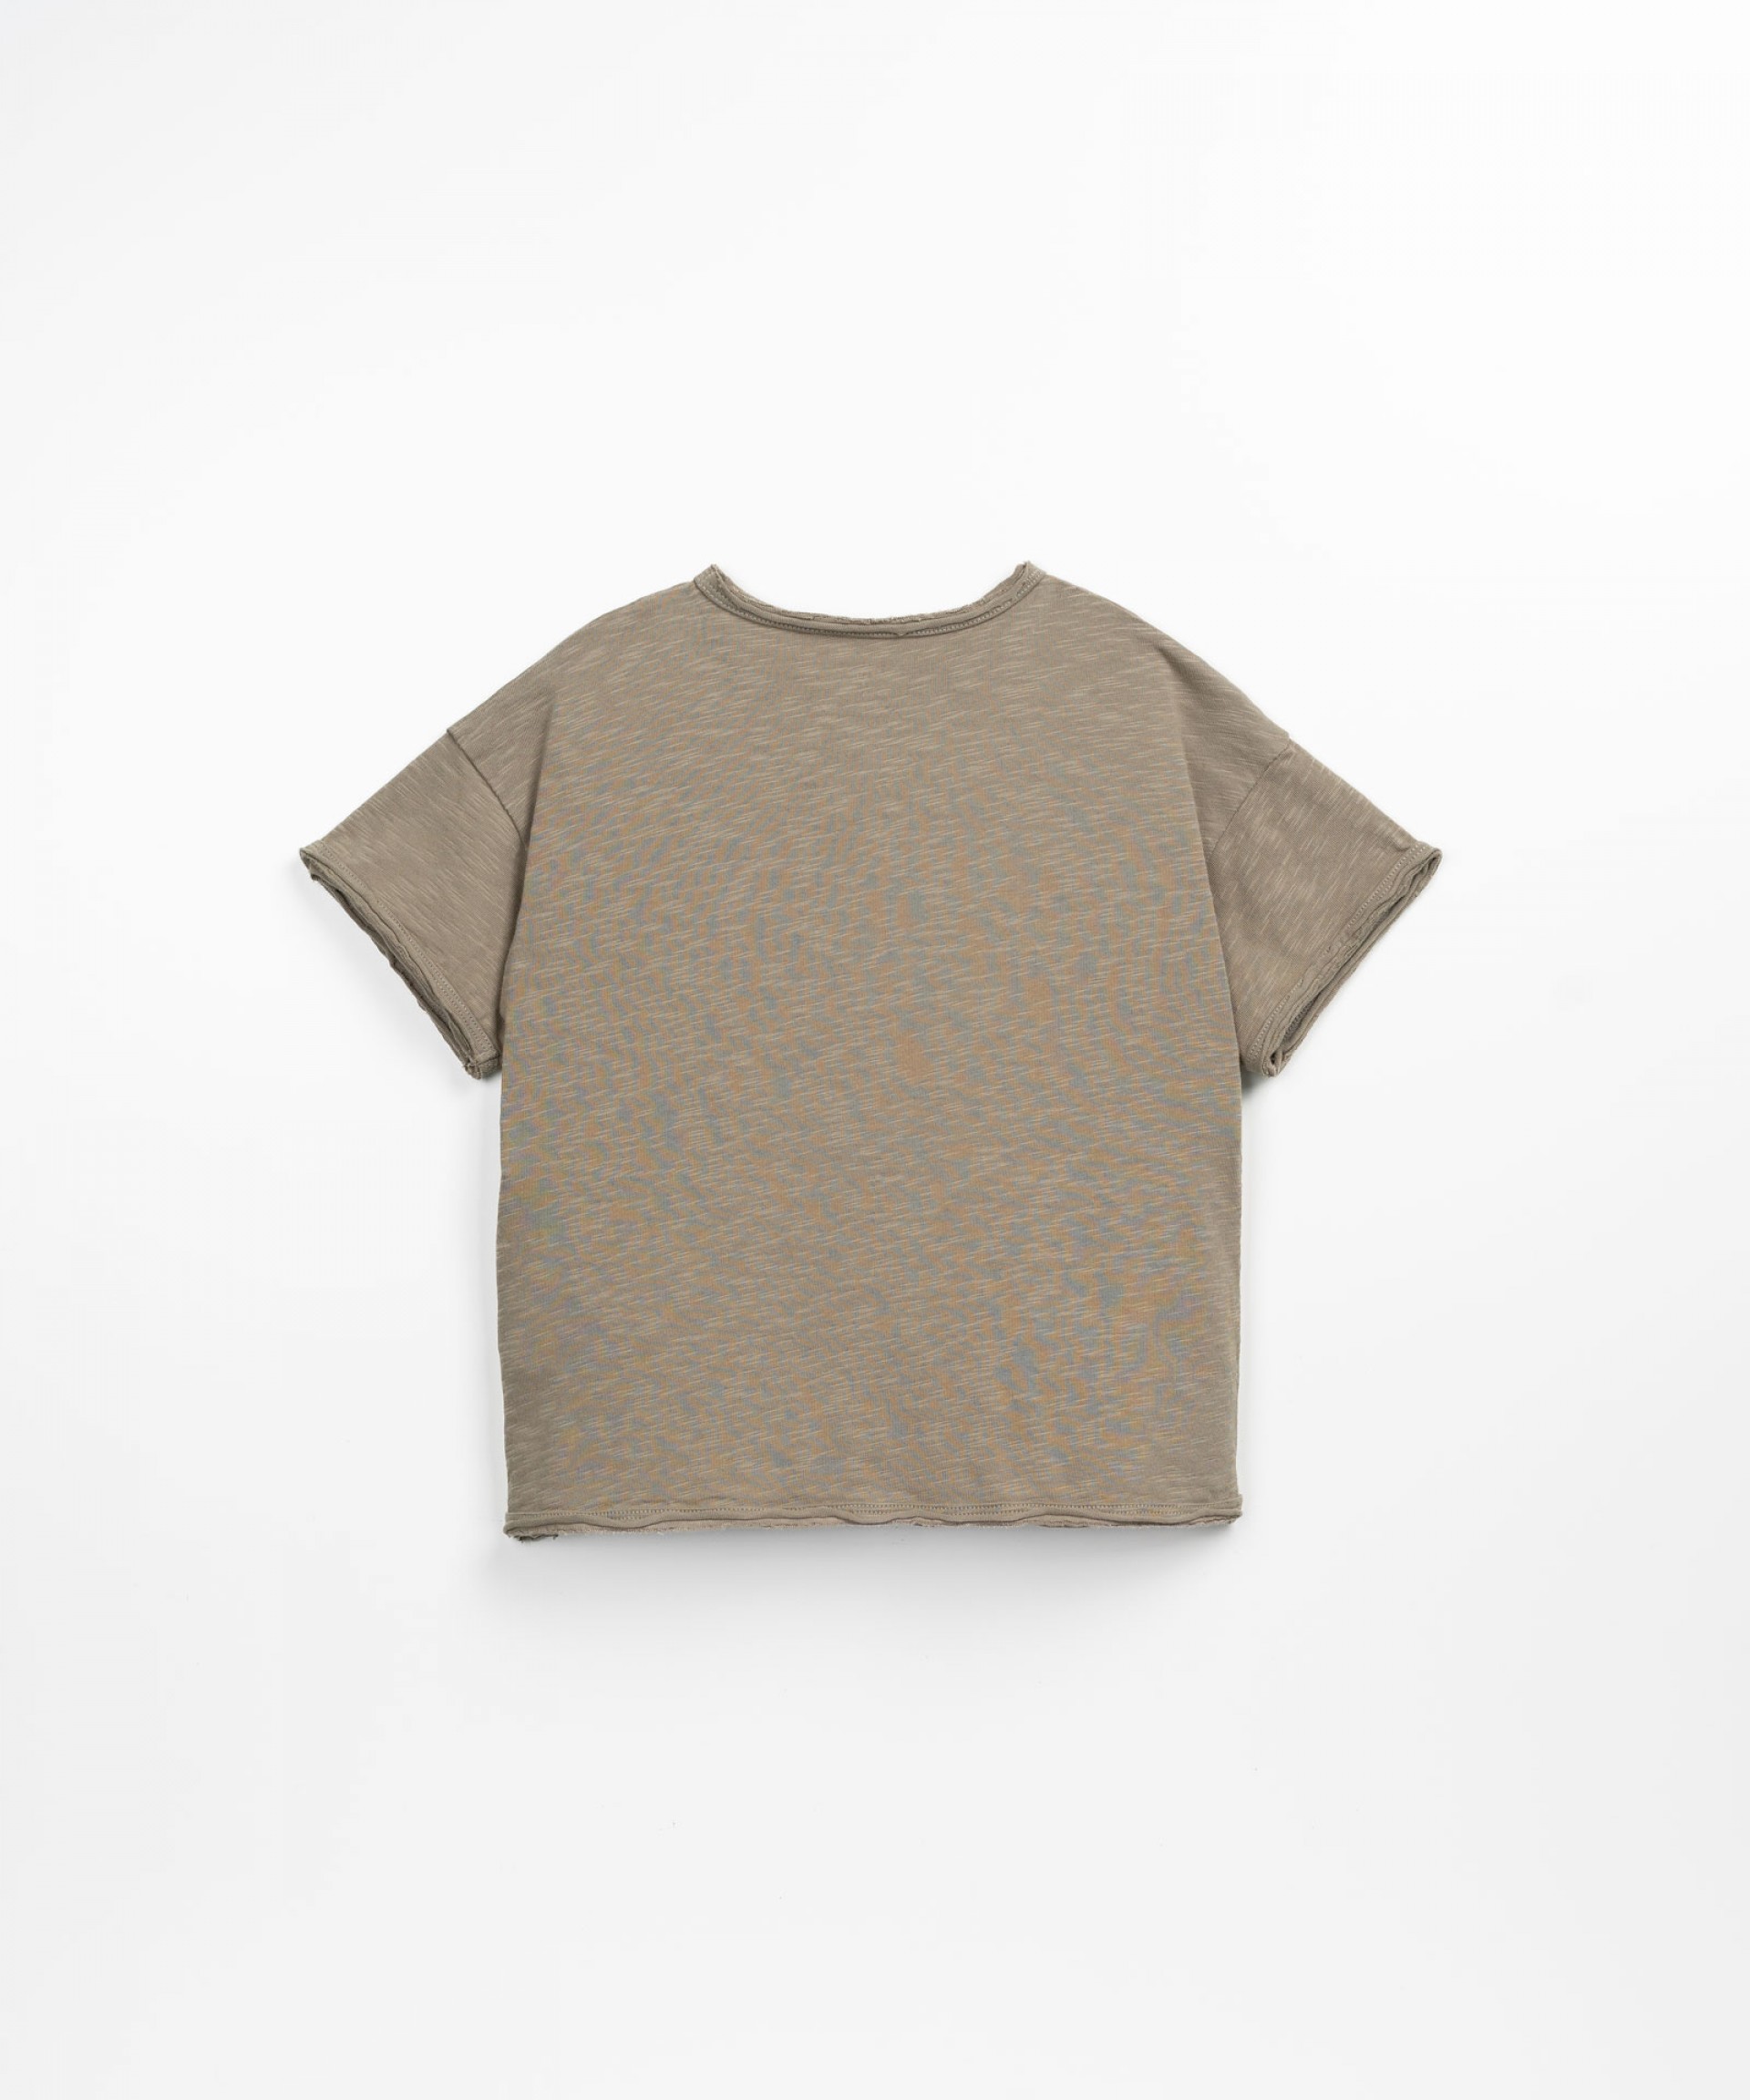 T-shirt with sharp-cut details | Textile Art